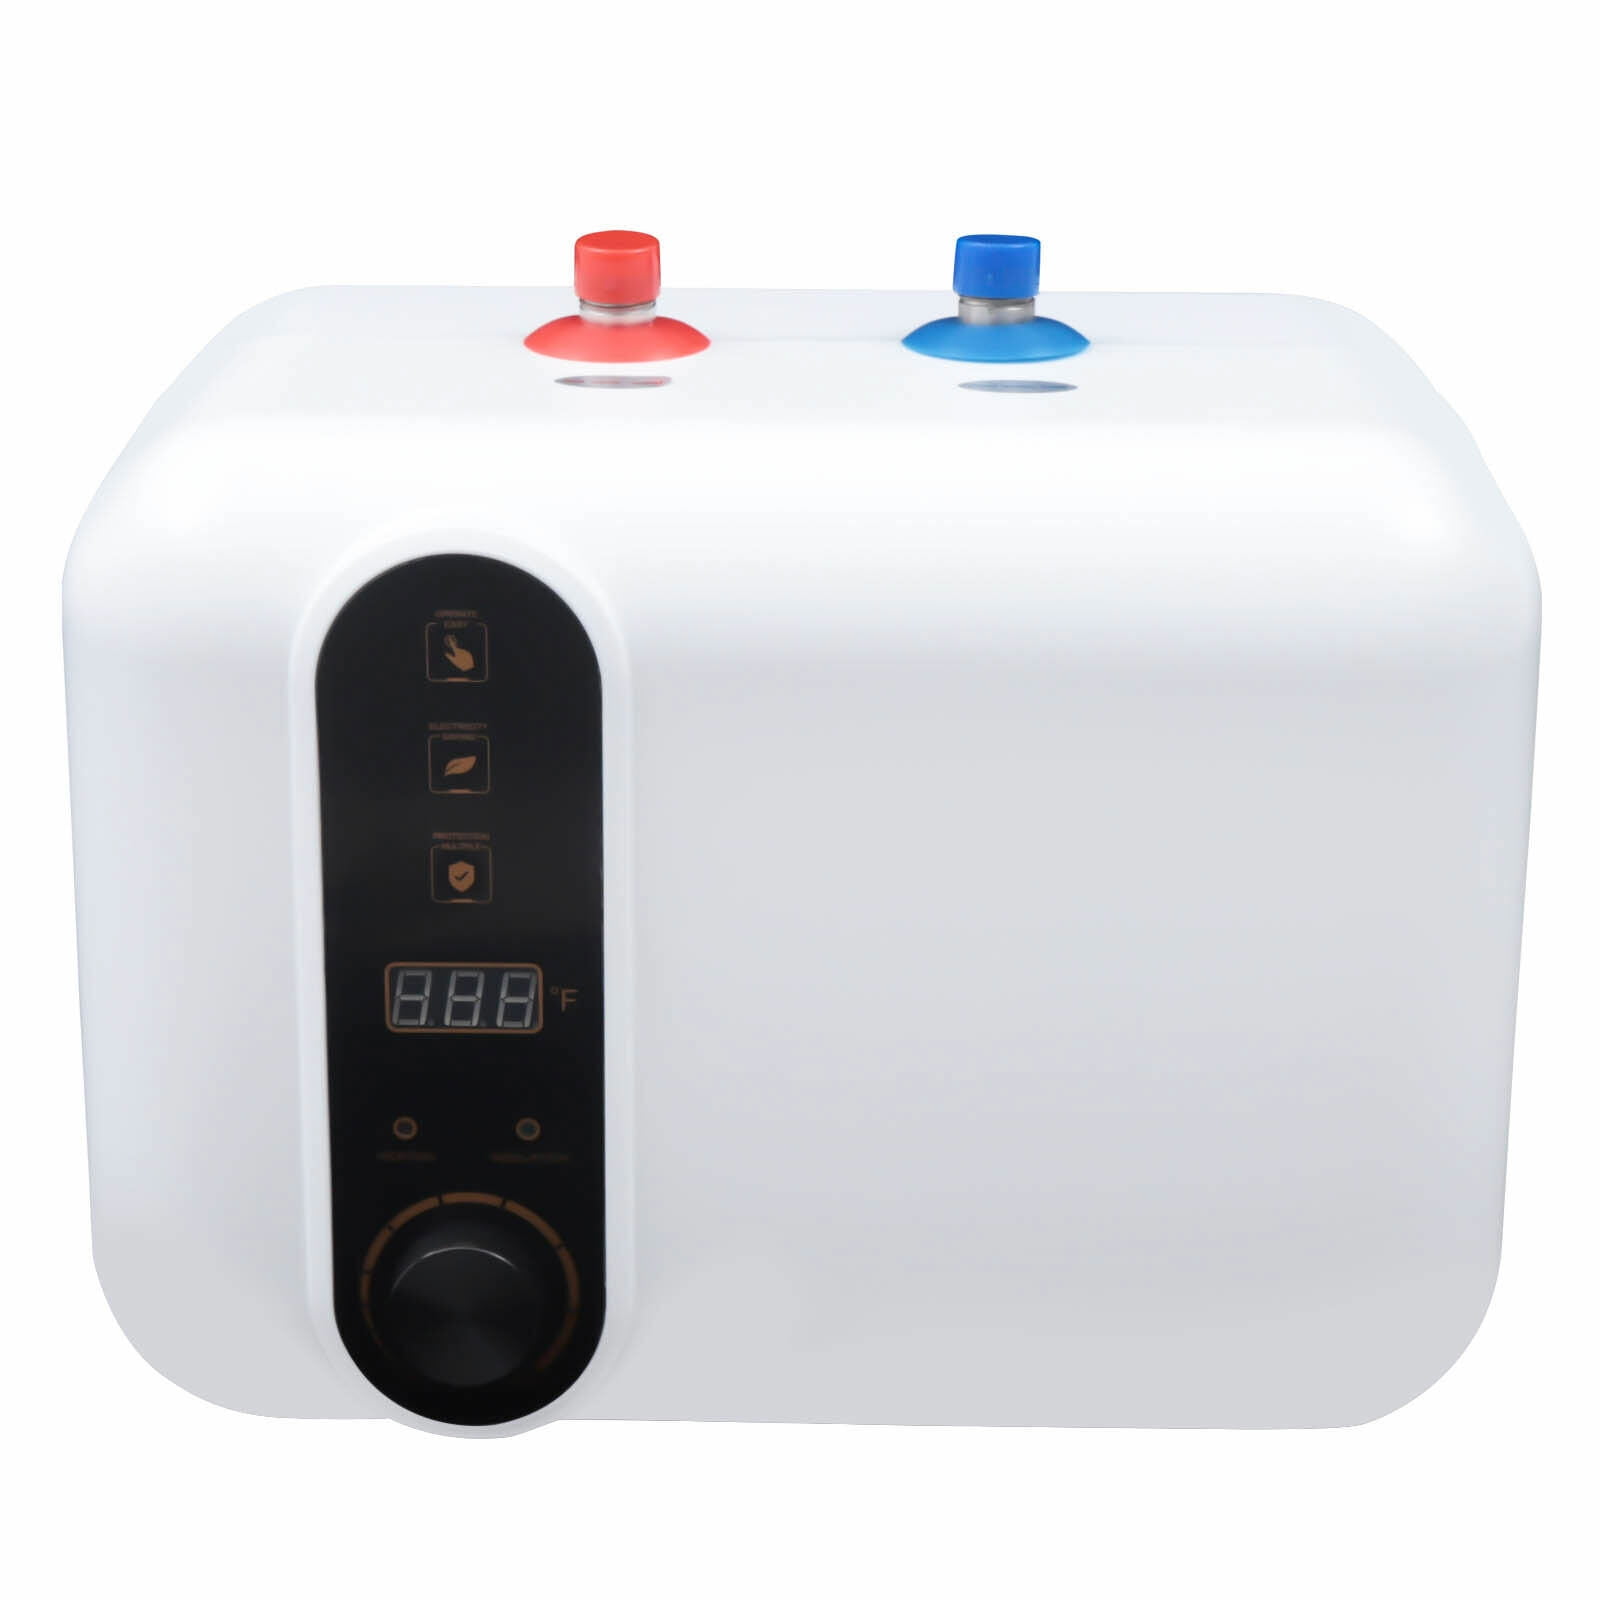 Mr.SHOT® Classic Voilet Model Instant Running Water Heater 